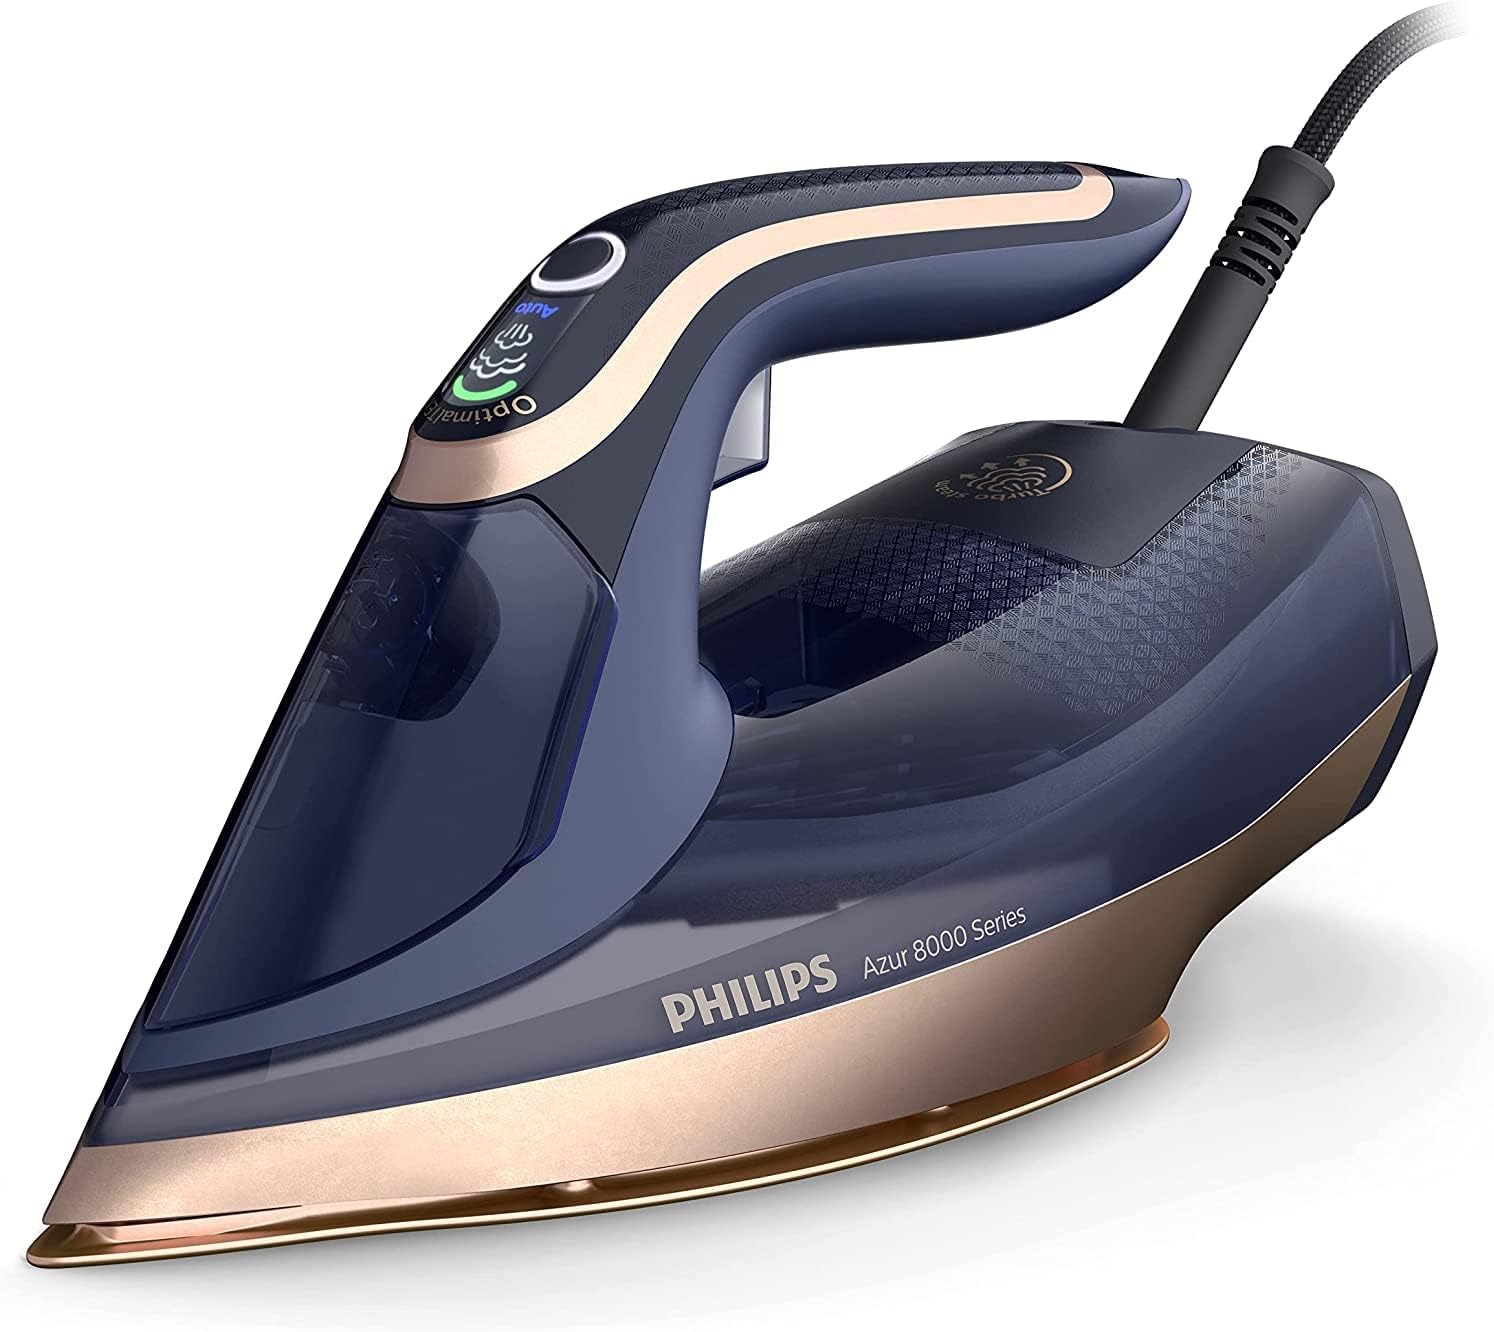 Philips DST8050